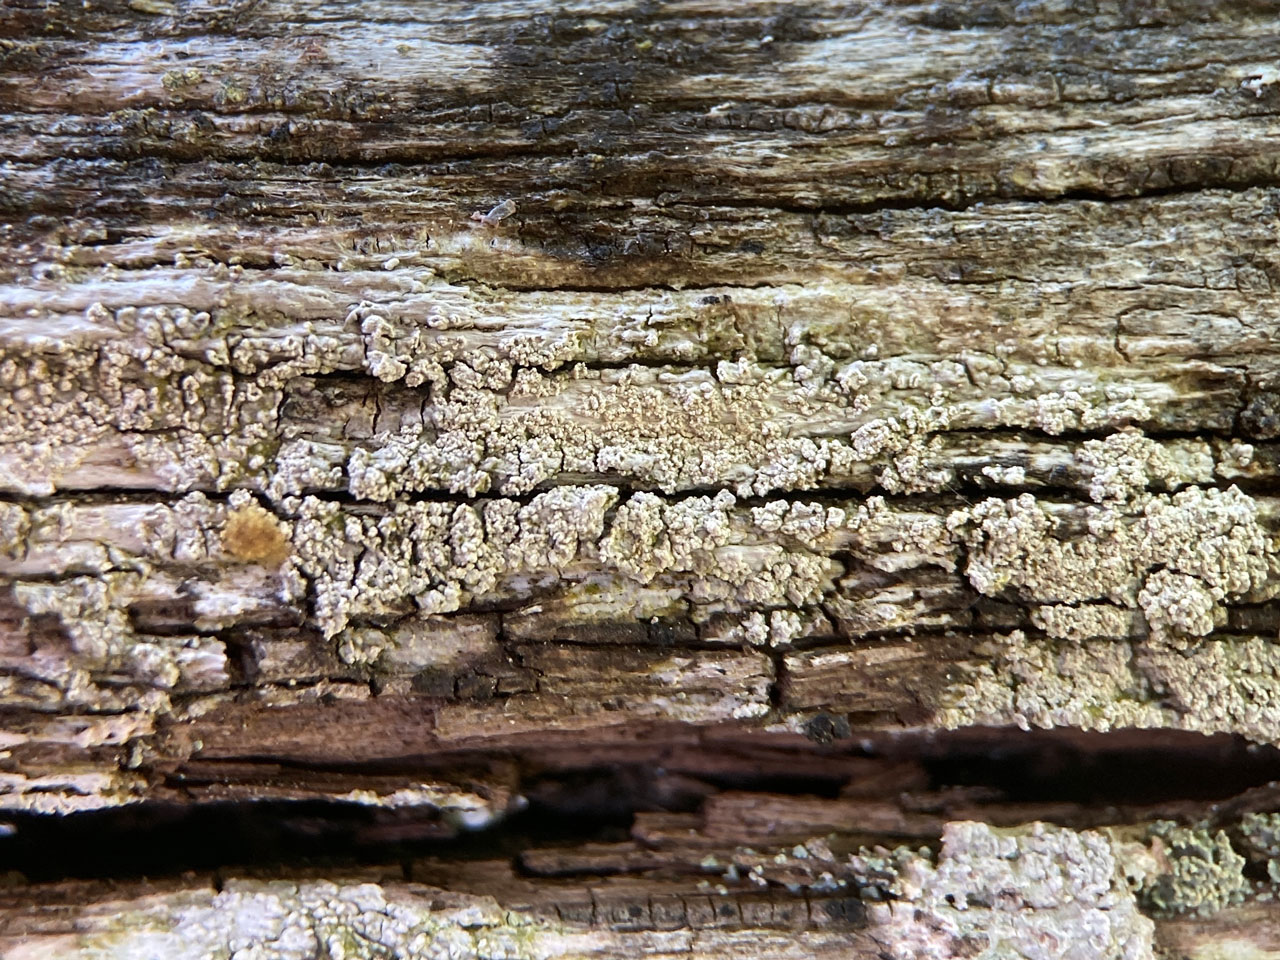 Ochrolechia microstictoides, Oak lignum, Yewtree Hill, New Forest